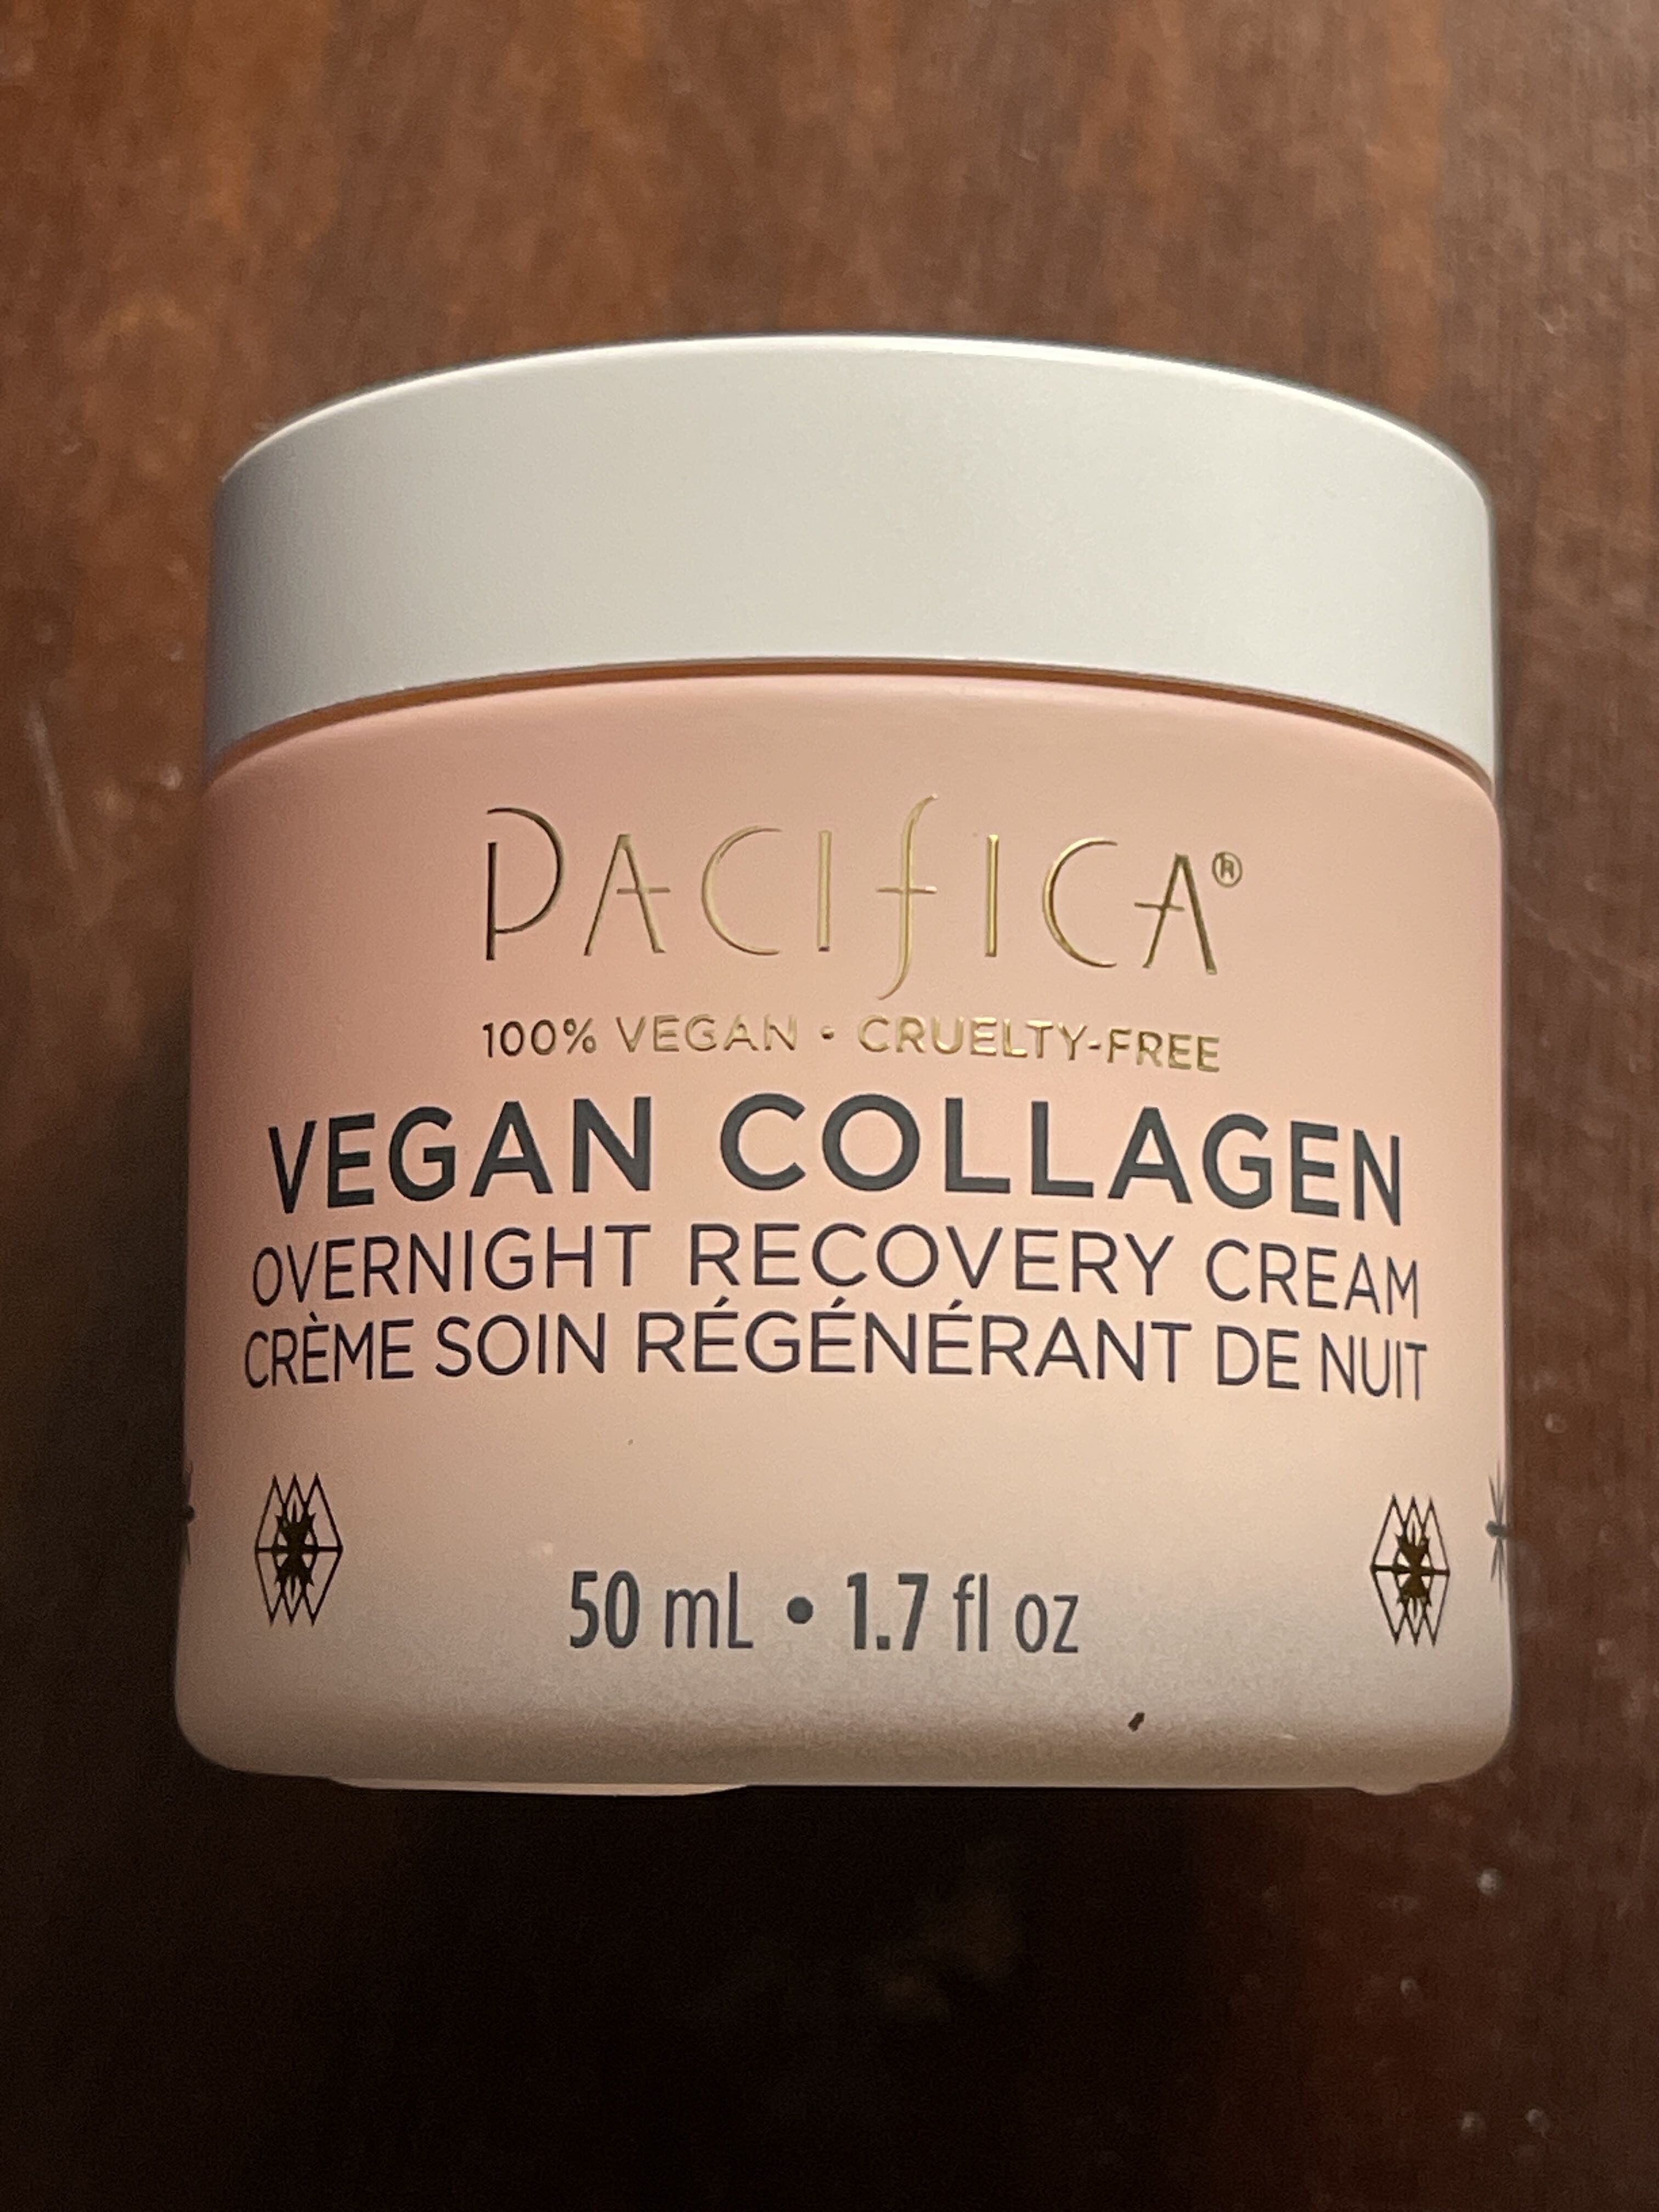 Vegan Collagen Overnight Recovery Cream - Produkt - en